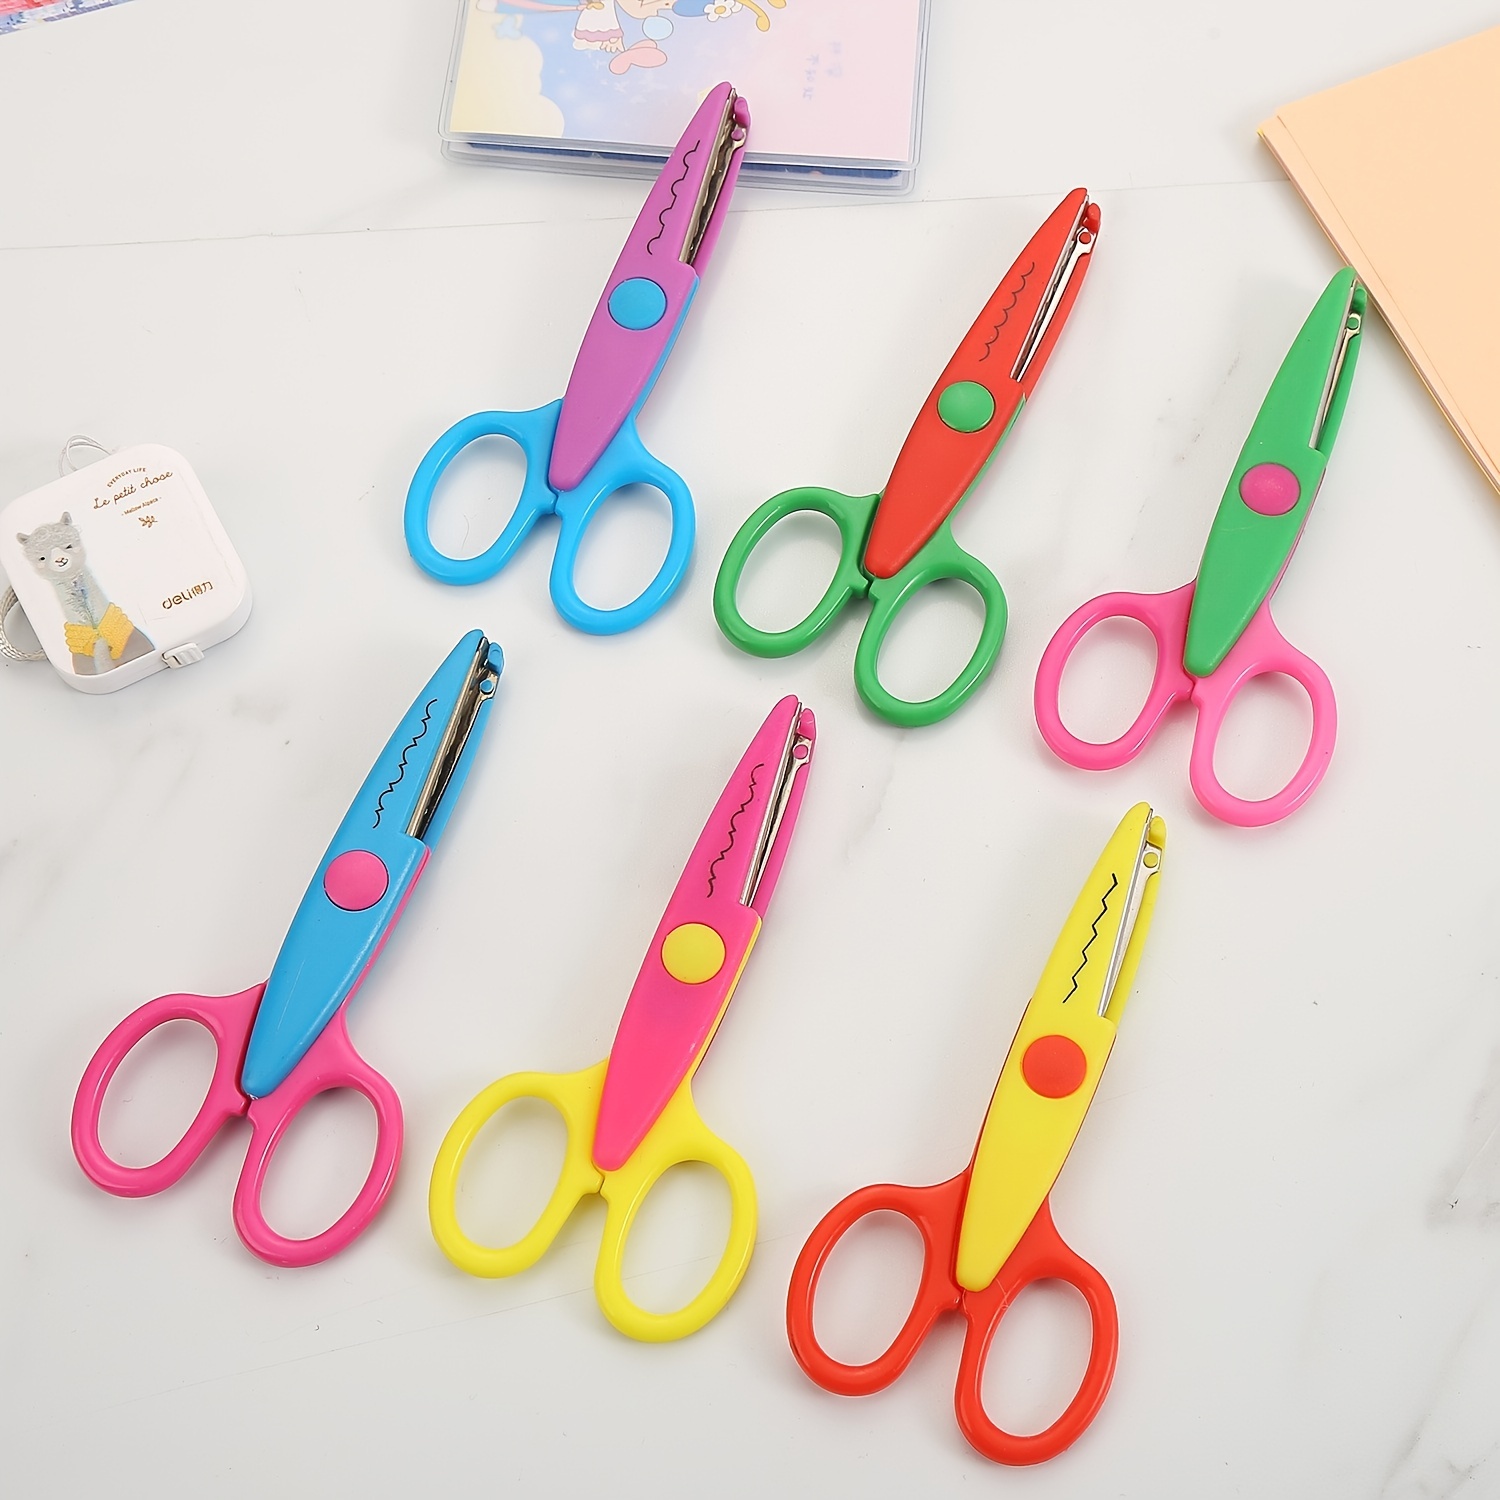 6pcs Safety Scalloped Edge Scissors Set For Diy Crafting & Flower